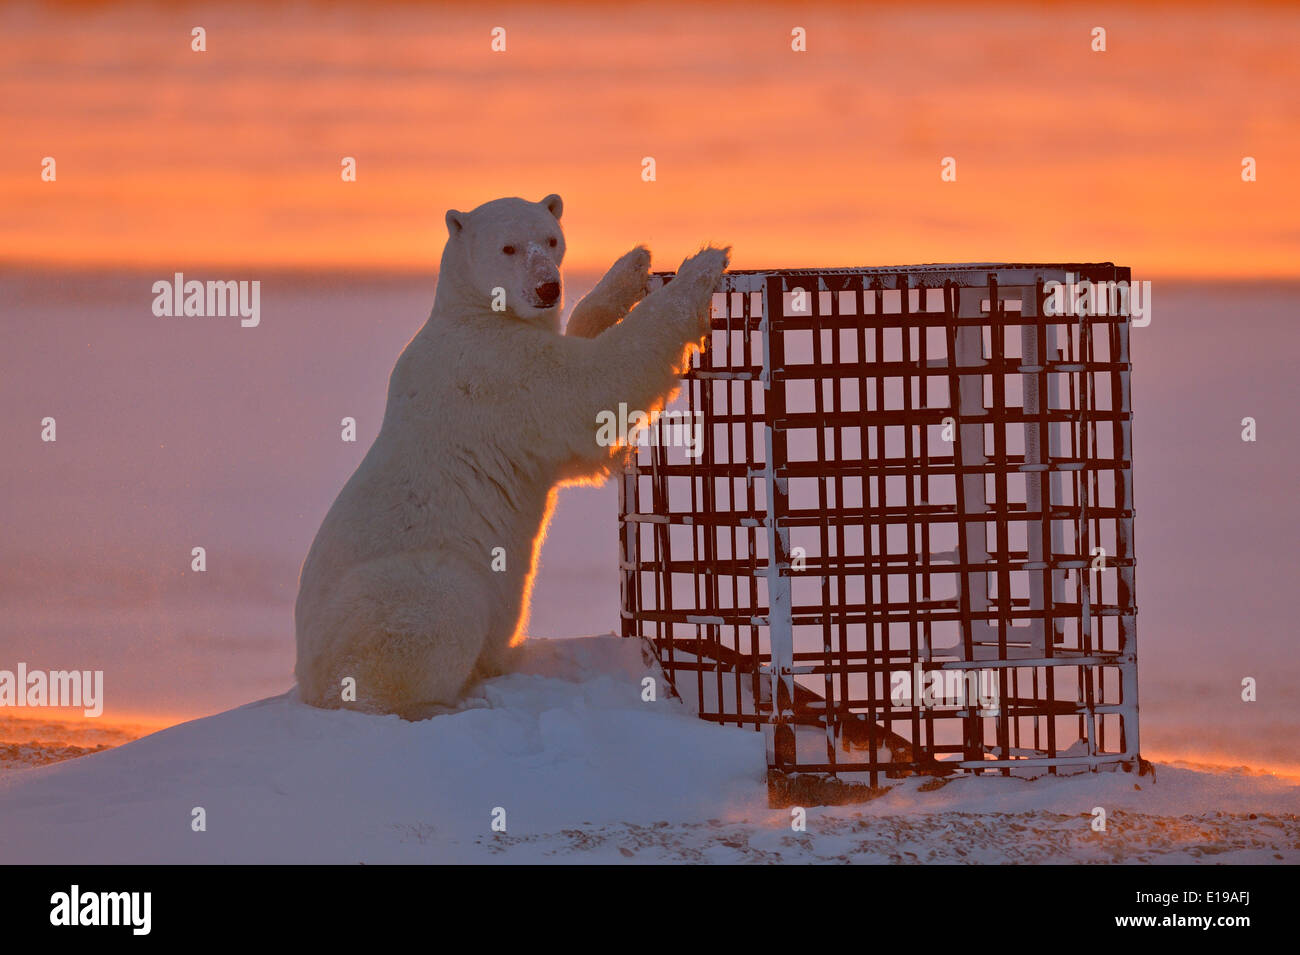 Polar bear (Ursus maritimus) Curiously investigating a man-made structure Wapusk National Park, Cape Churchill Manitoba Canada Stock Photo